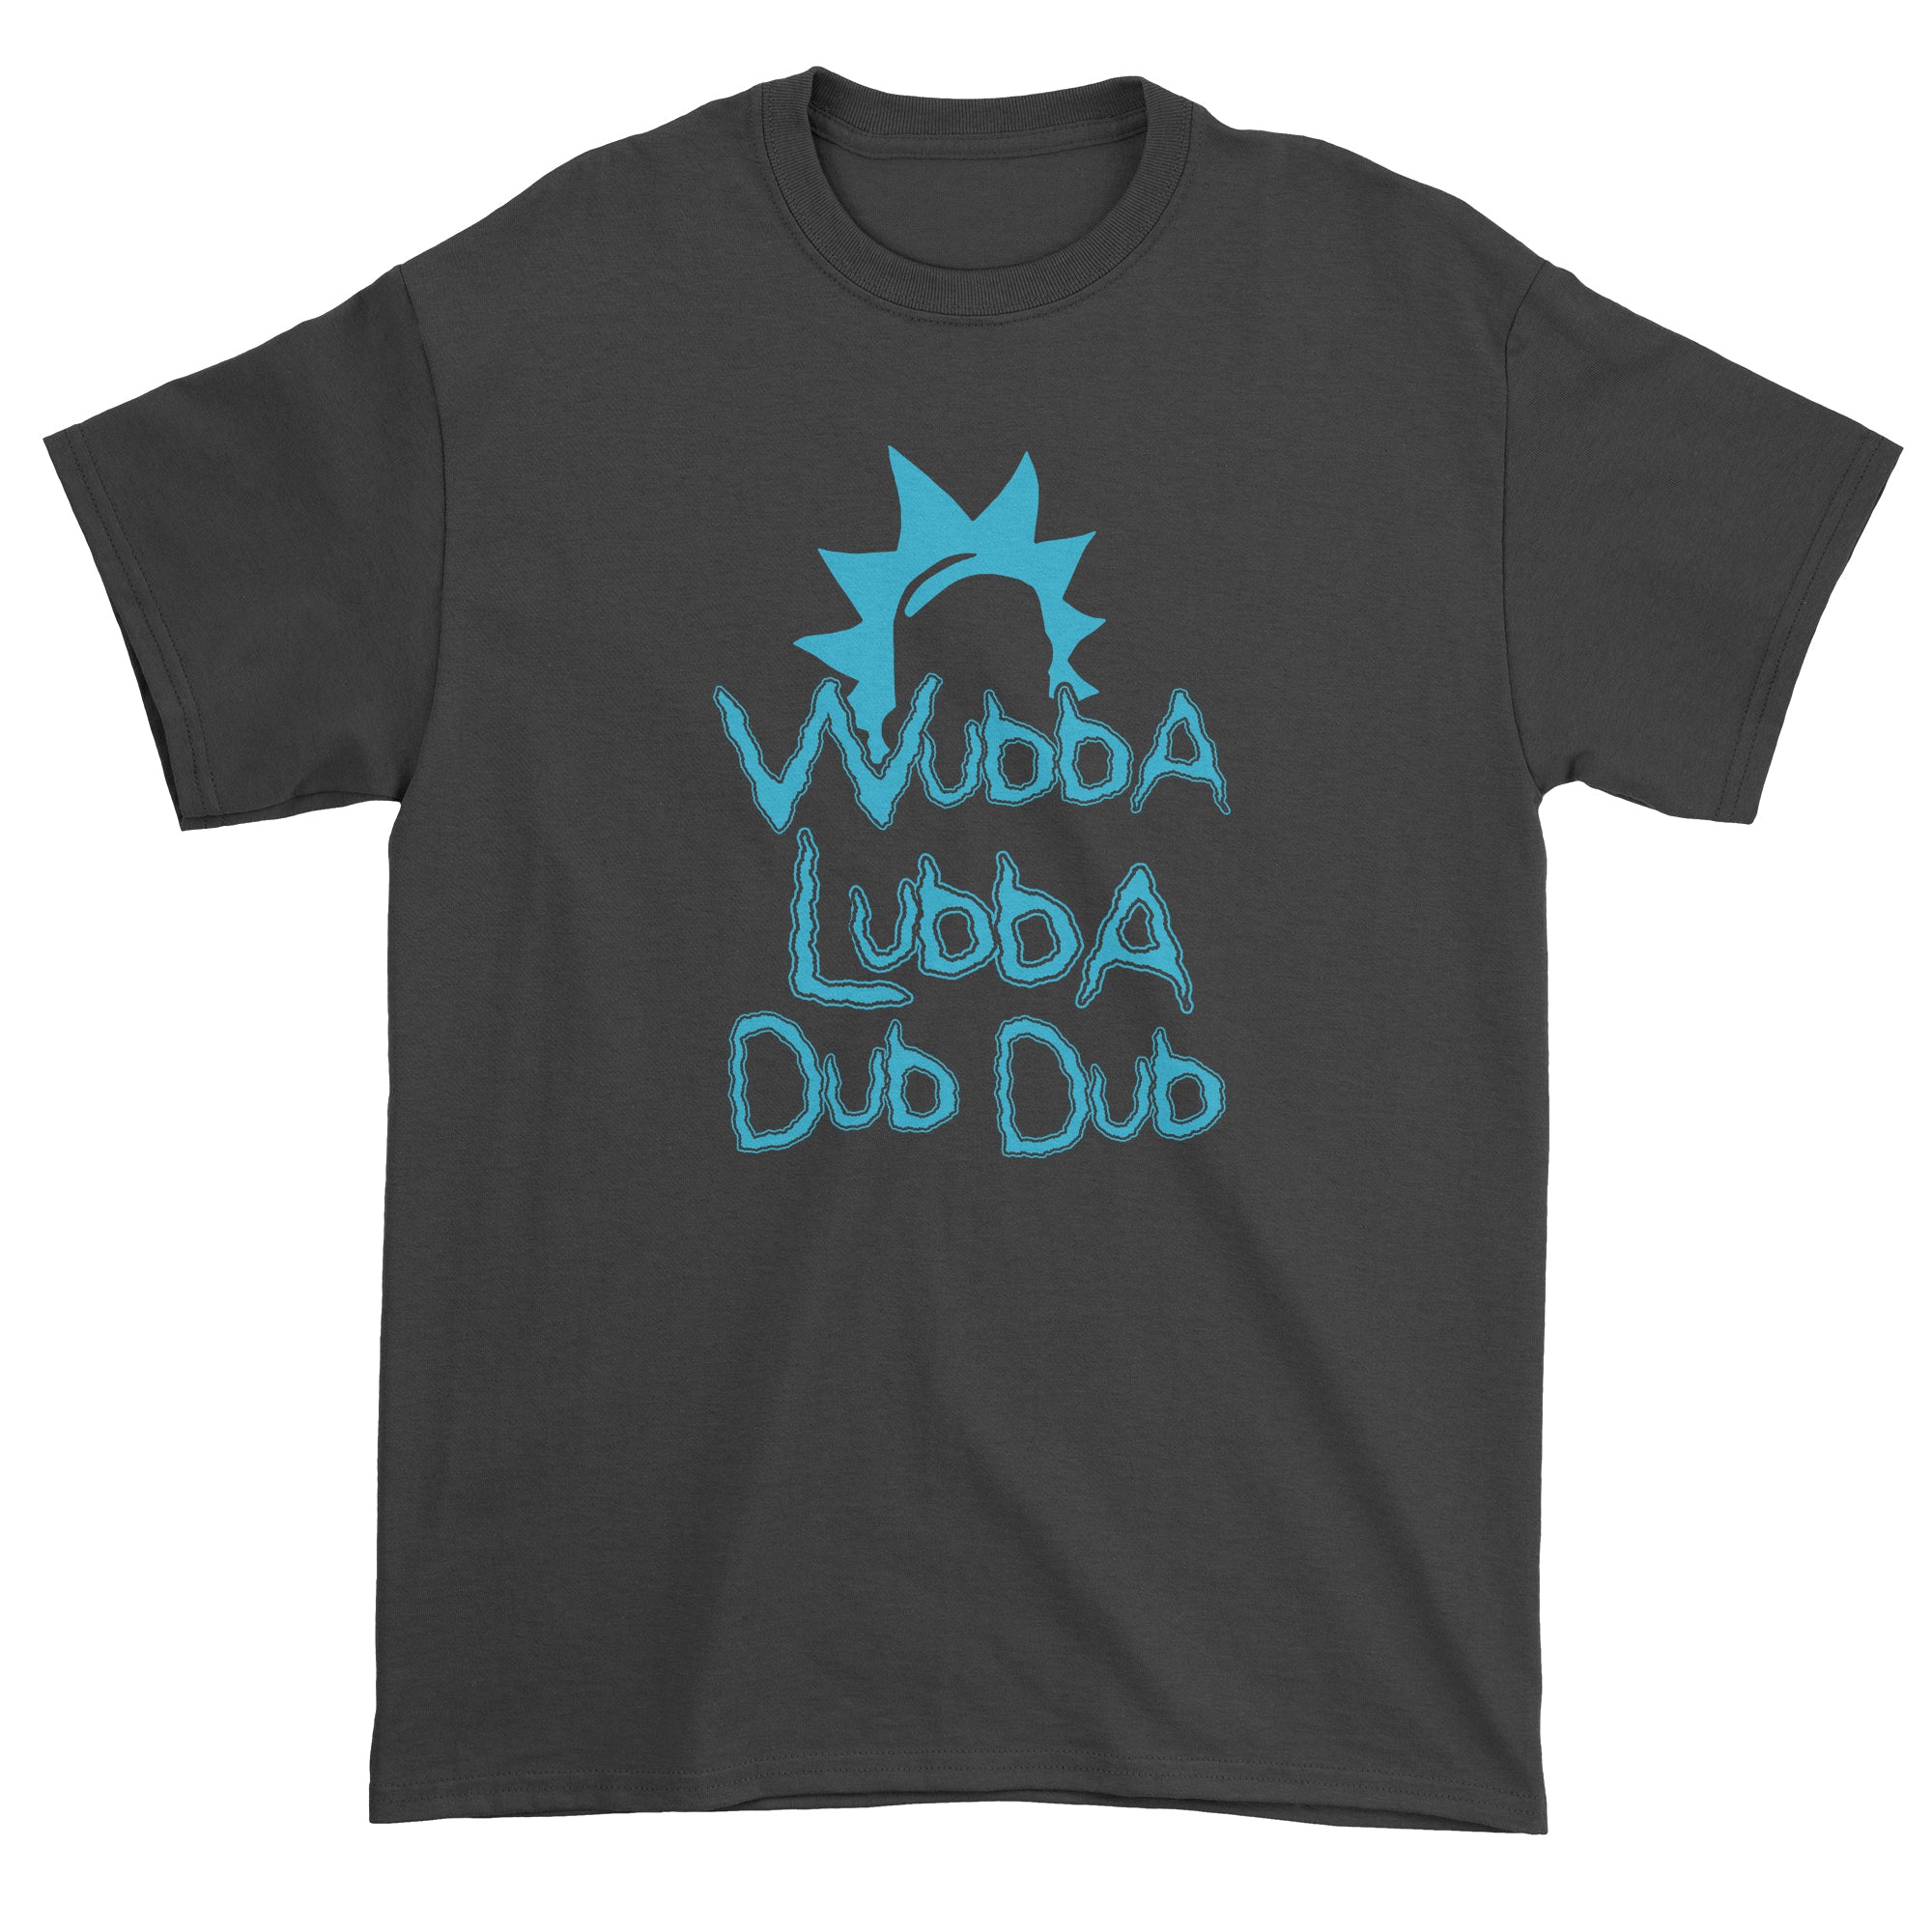 Wubba Lubba Dub Dub Men's T-Shirt